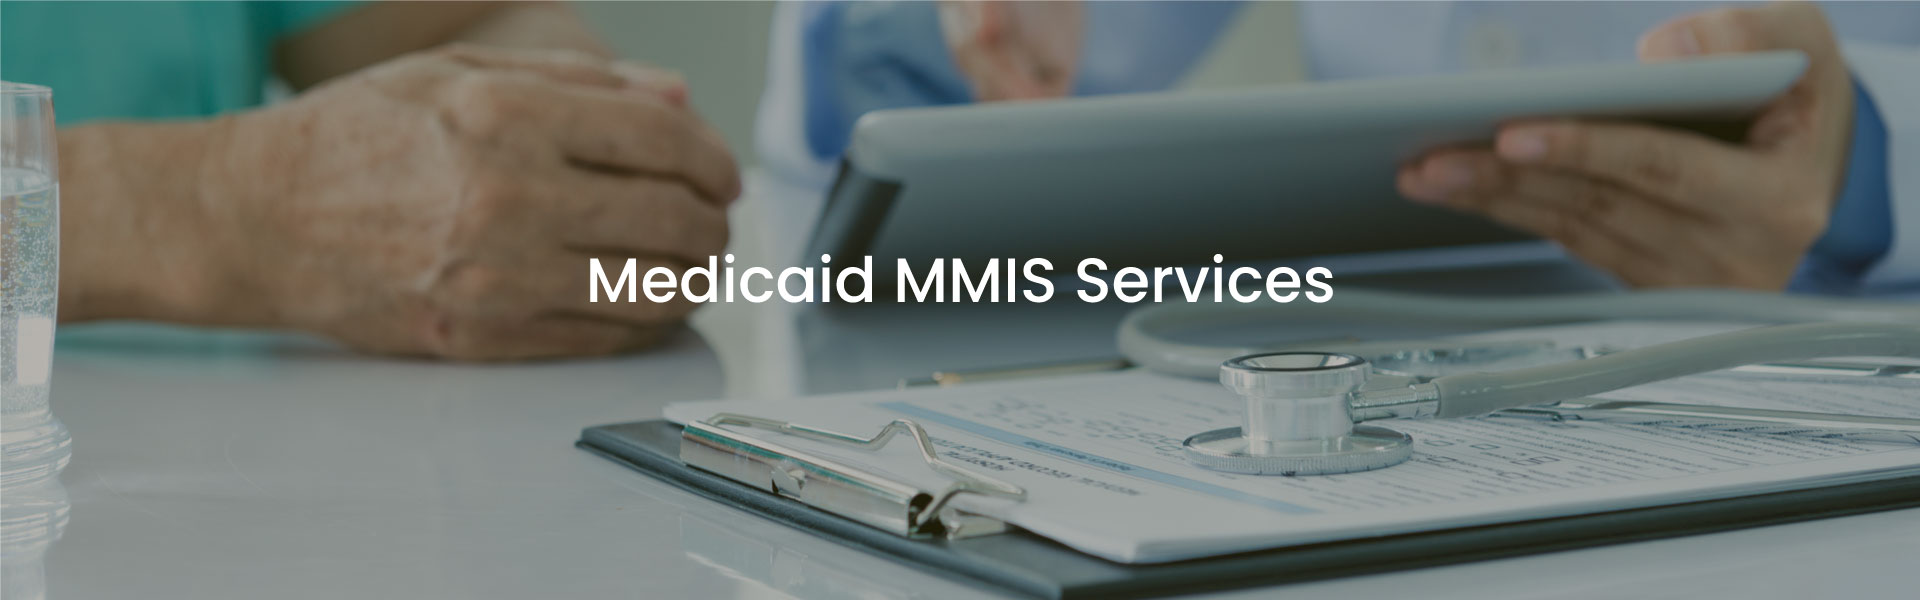 Medicaid Enterprise Systems (MES) Modernization